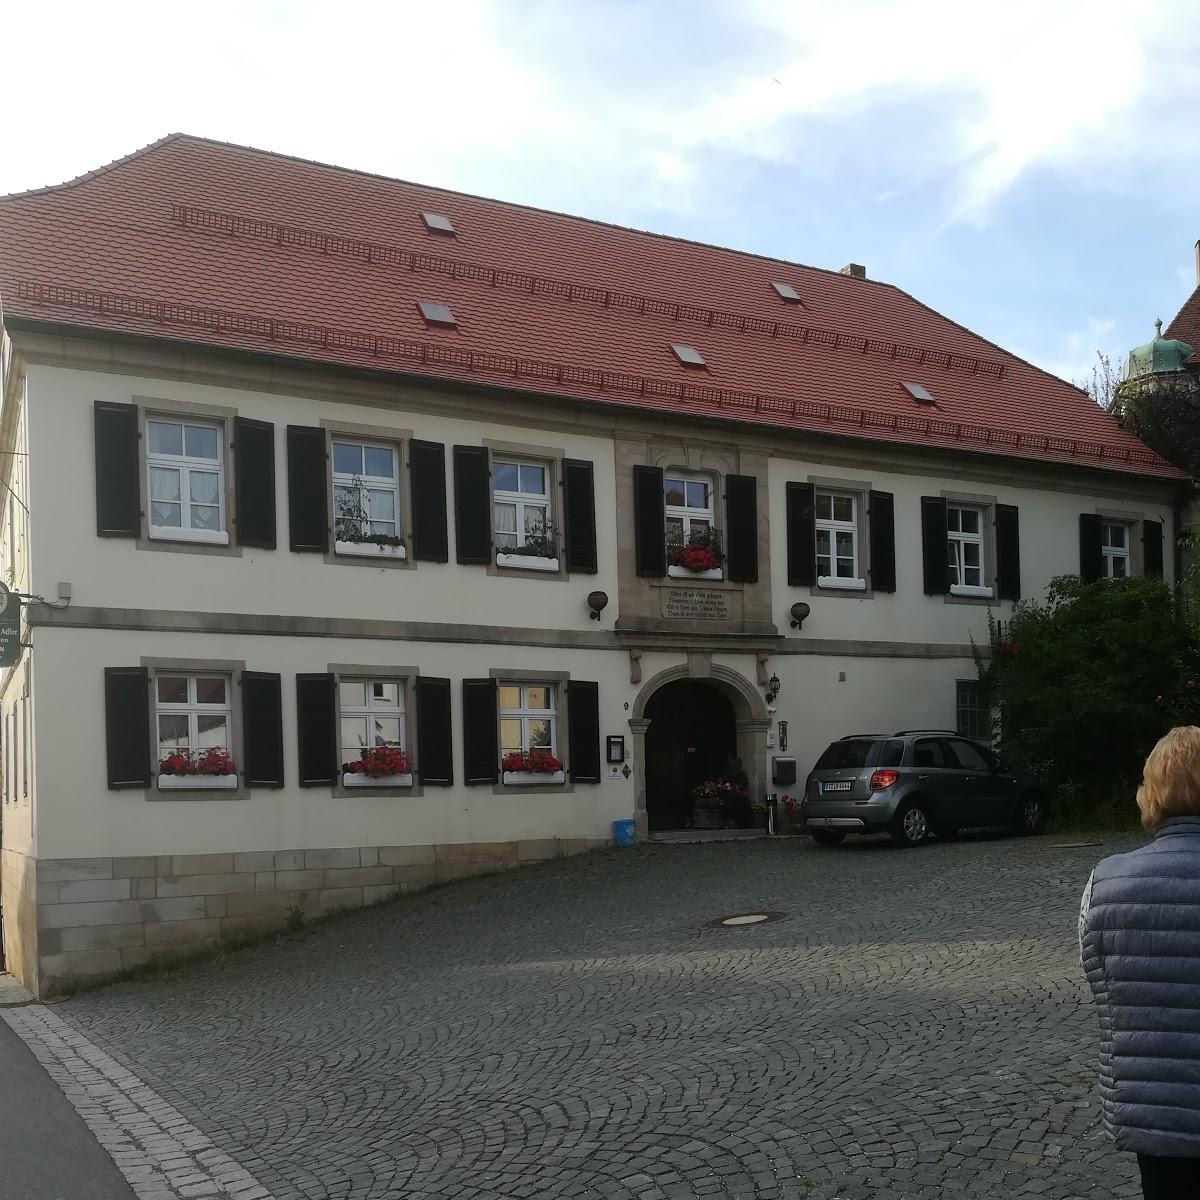 Restaurant "Entenmühle Gasthof & Pension in Bayern" in  Gefrees